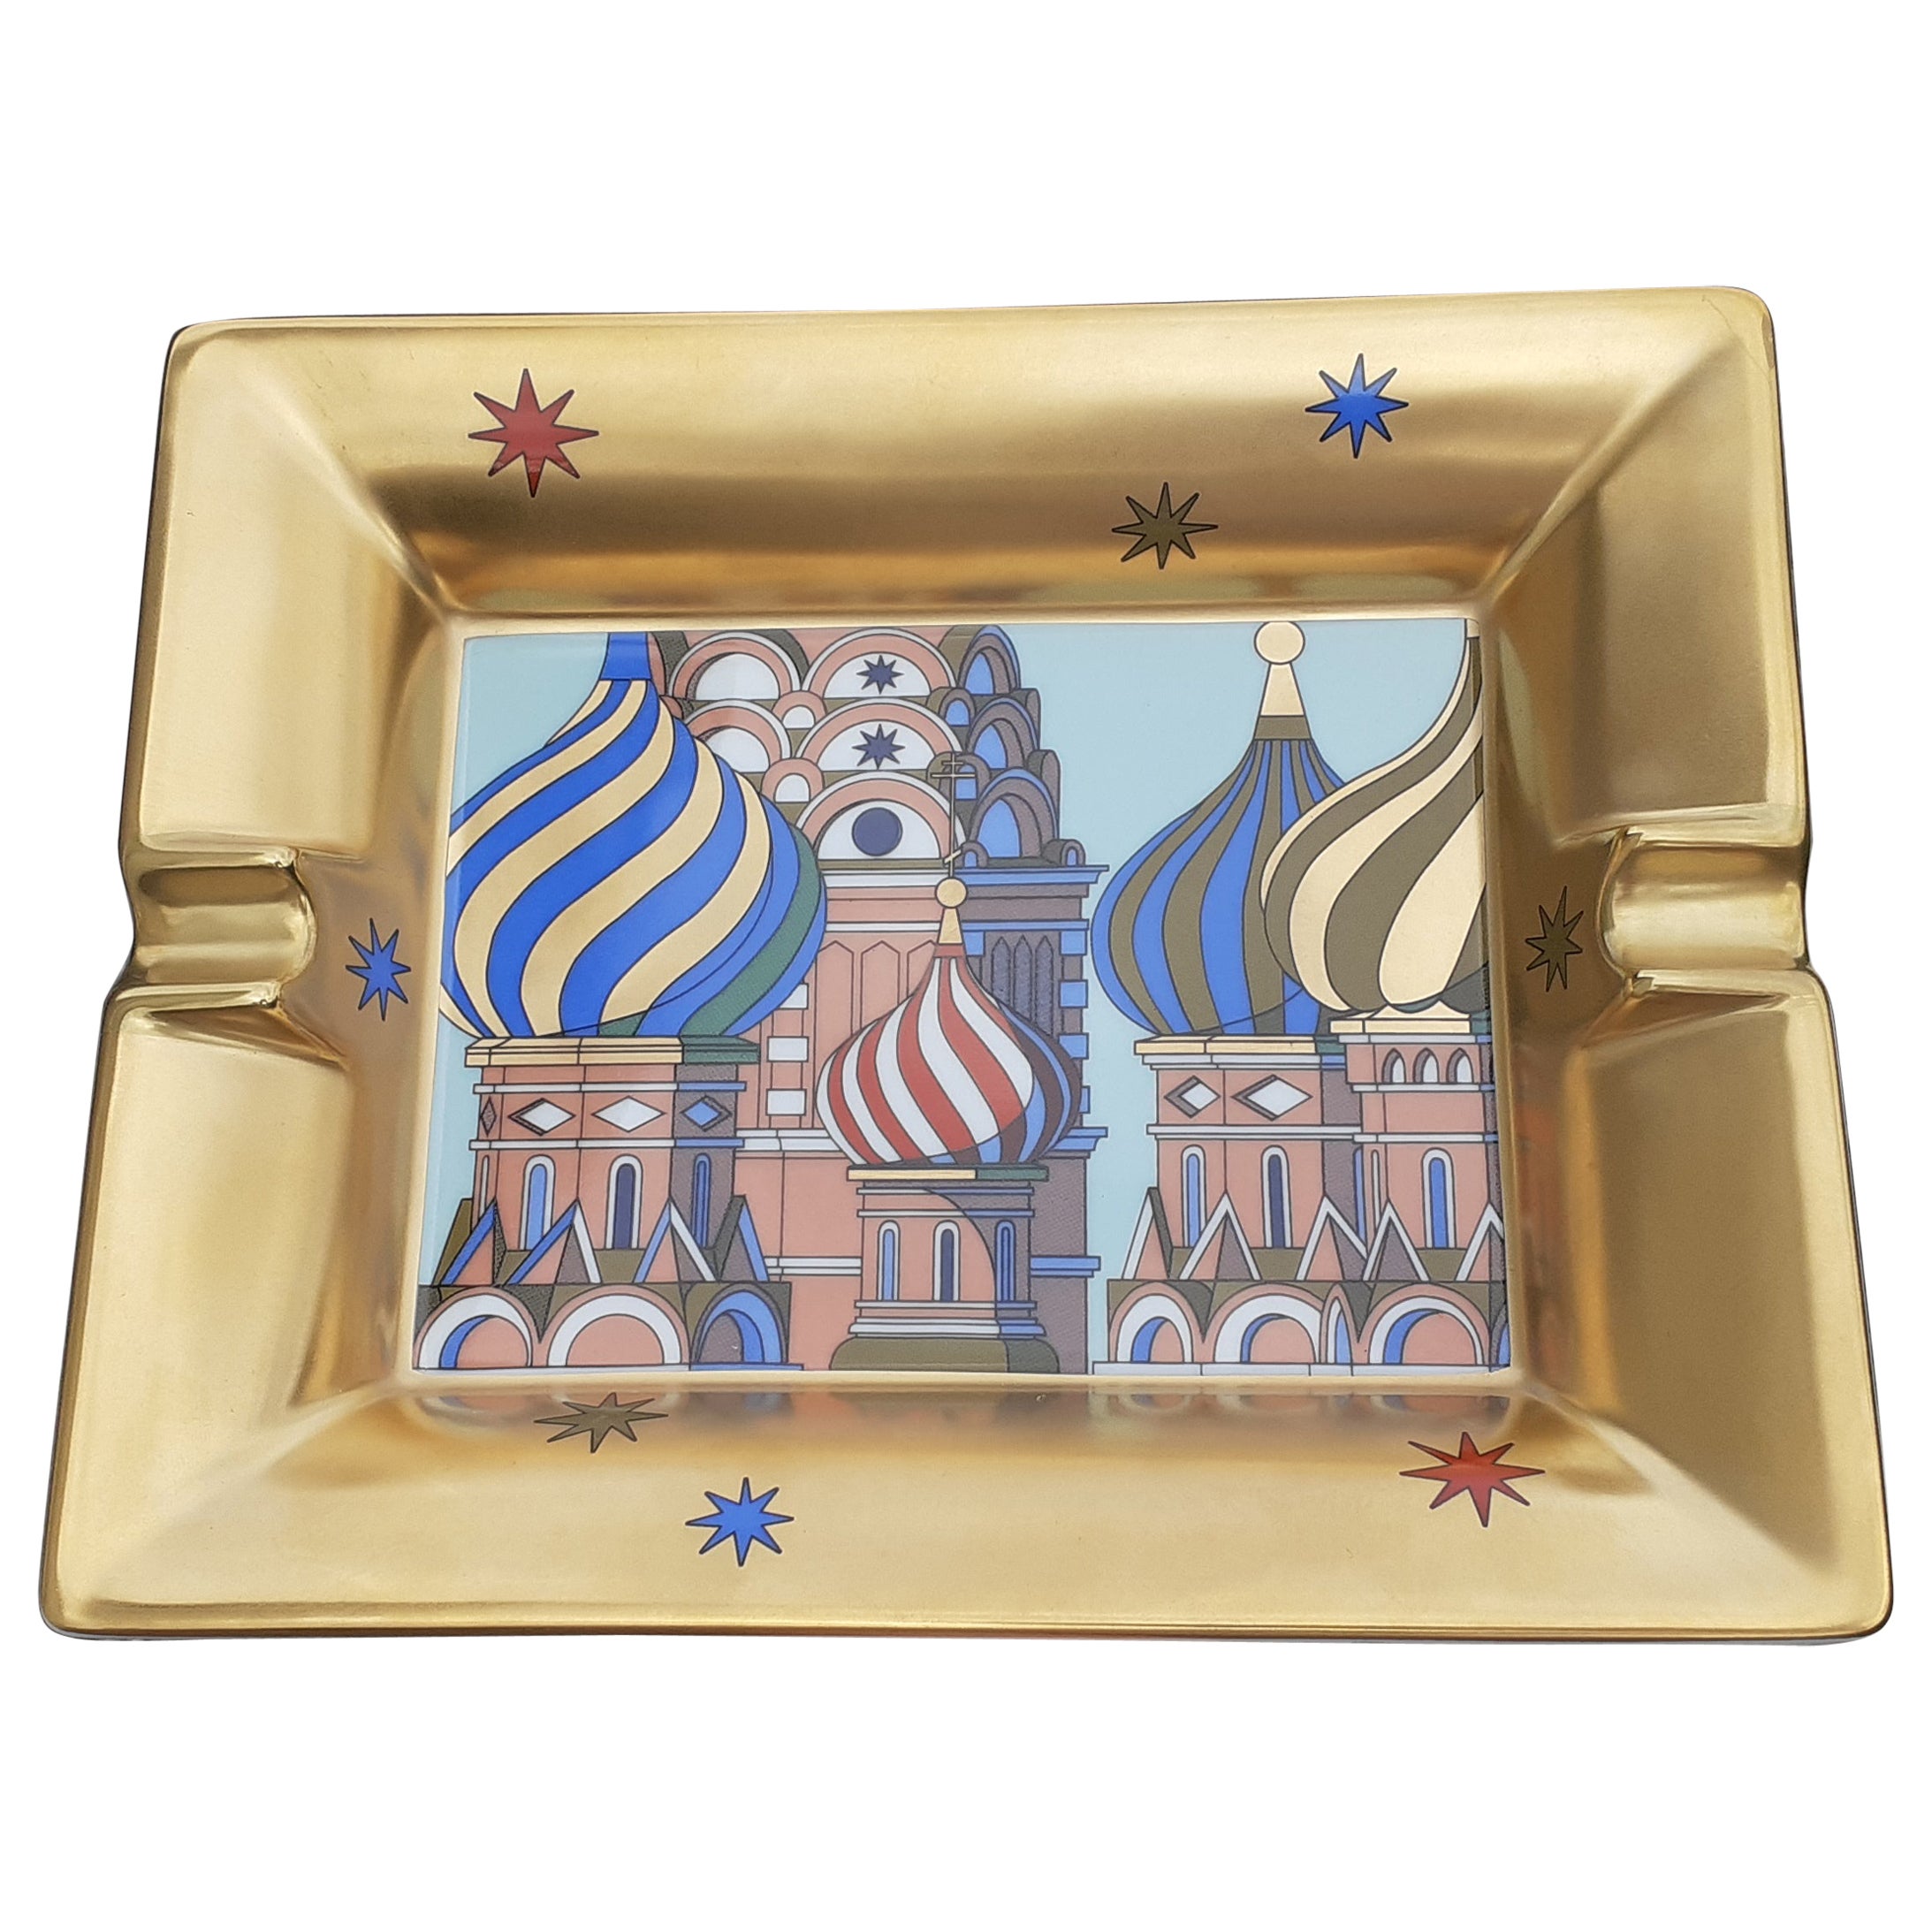 Hermès Ashtray Sobor Vasiliya Blazhennogo Saint Basil Cathedral Porcelain Russia For Sale